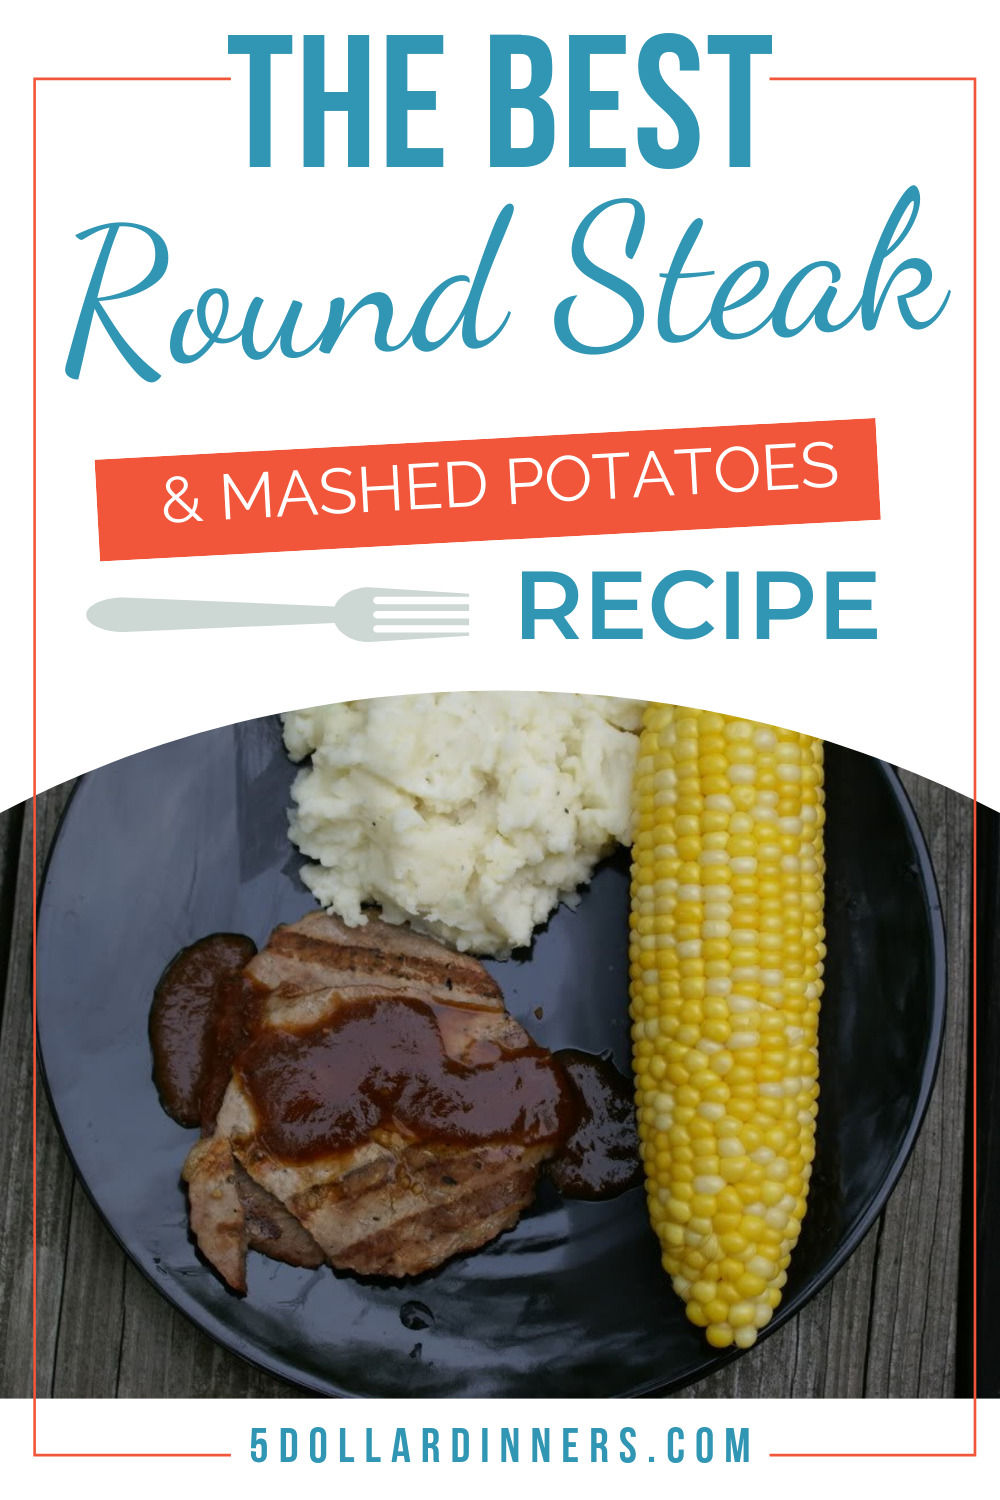 round steak and mashed potatoes